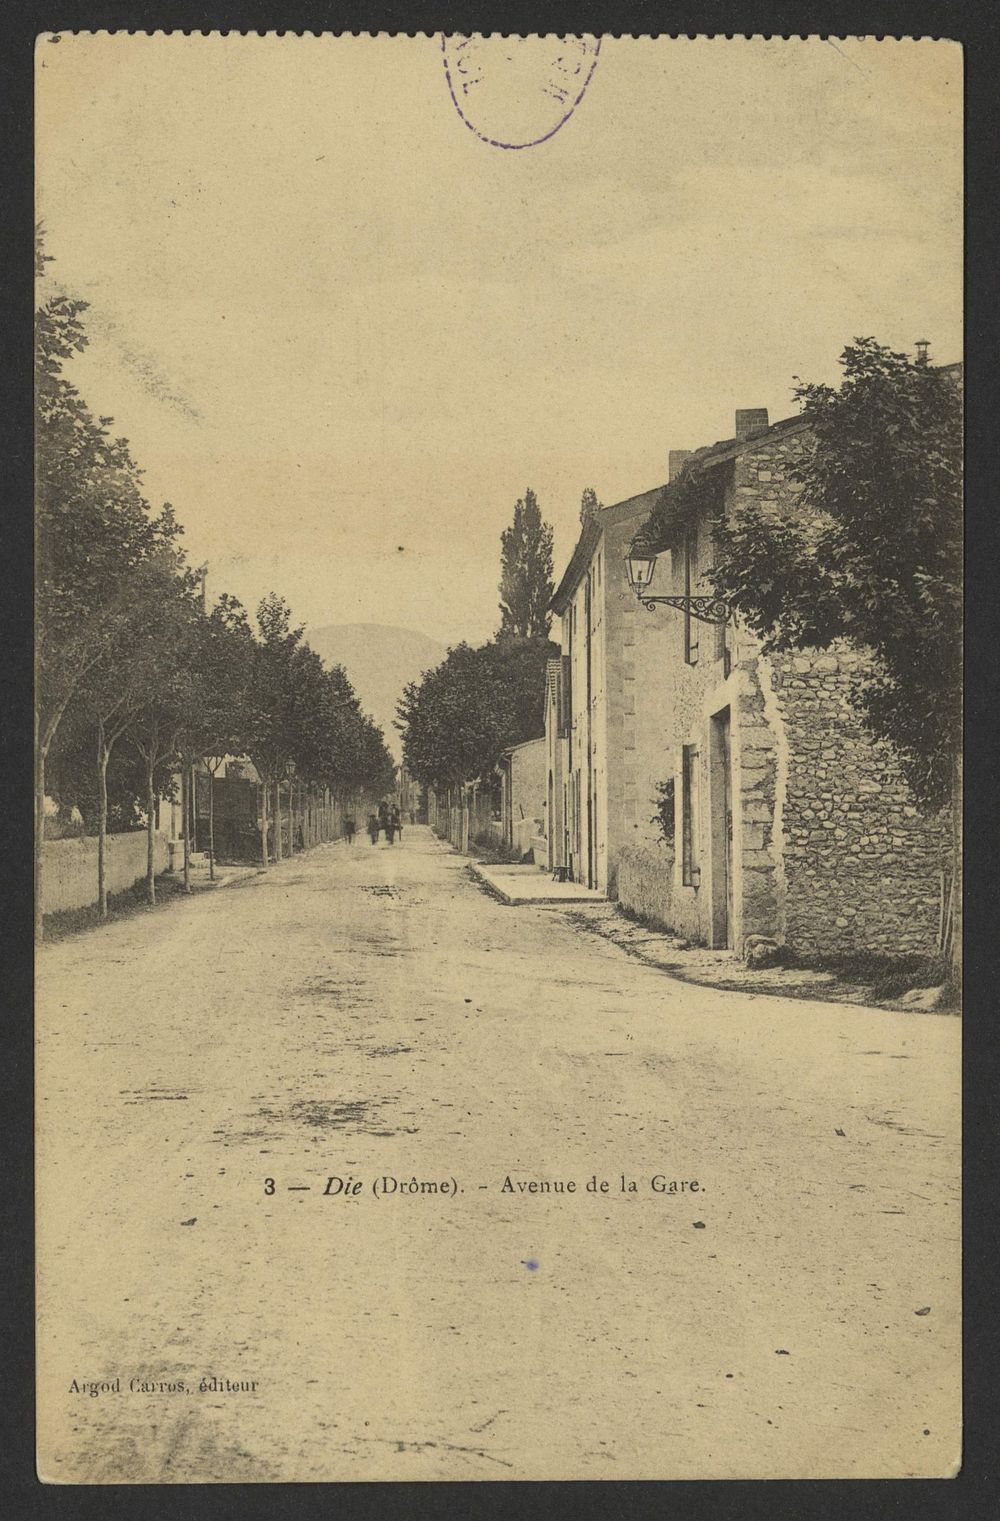 Die (Drôme). - Avenue de la Gare